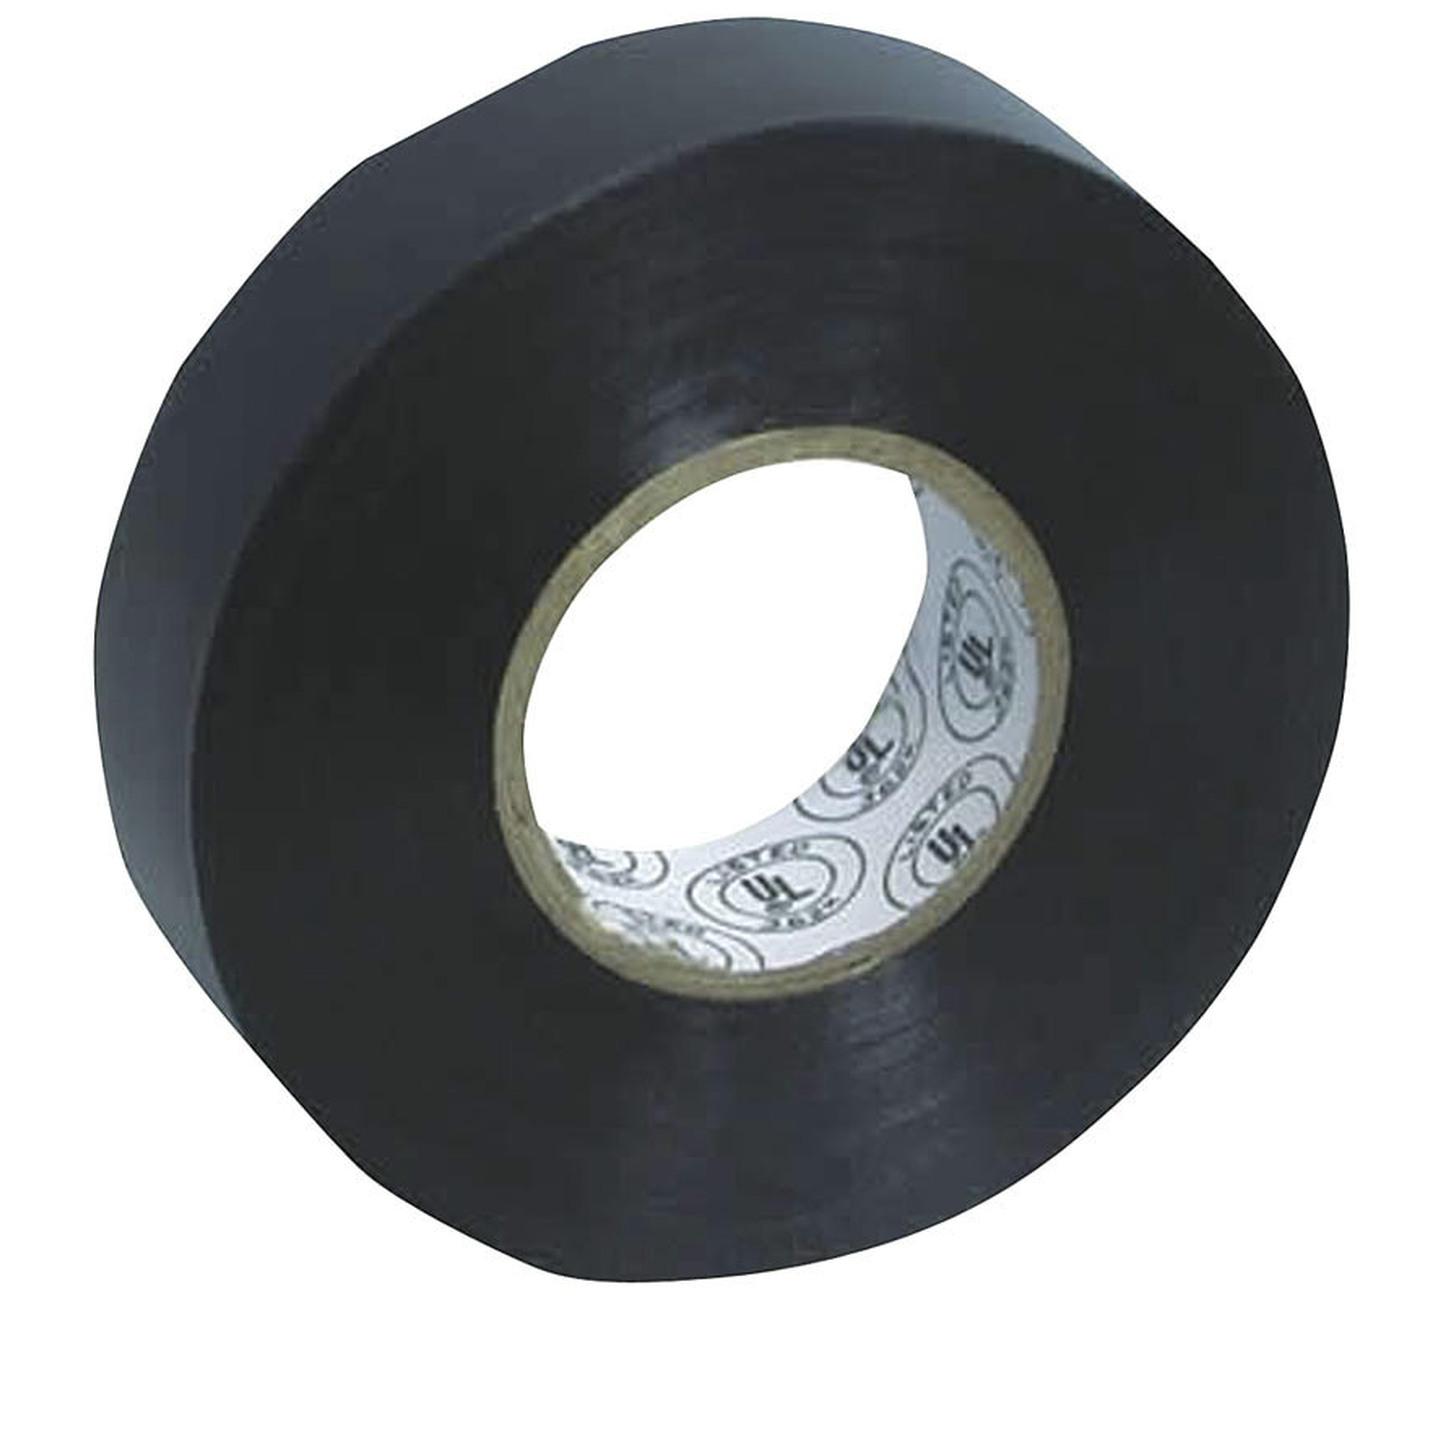 20M Roll PVC Insulation Tape - Black